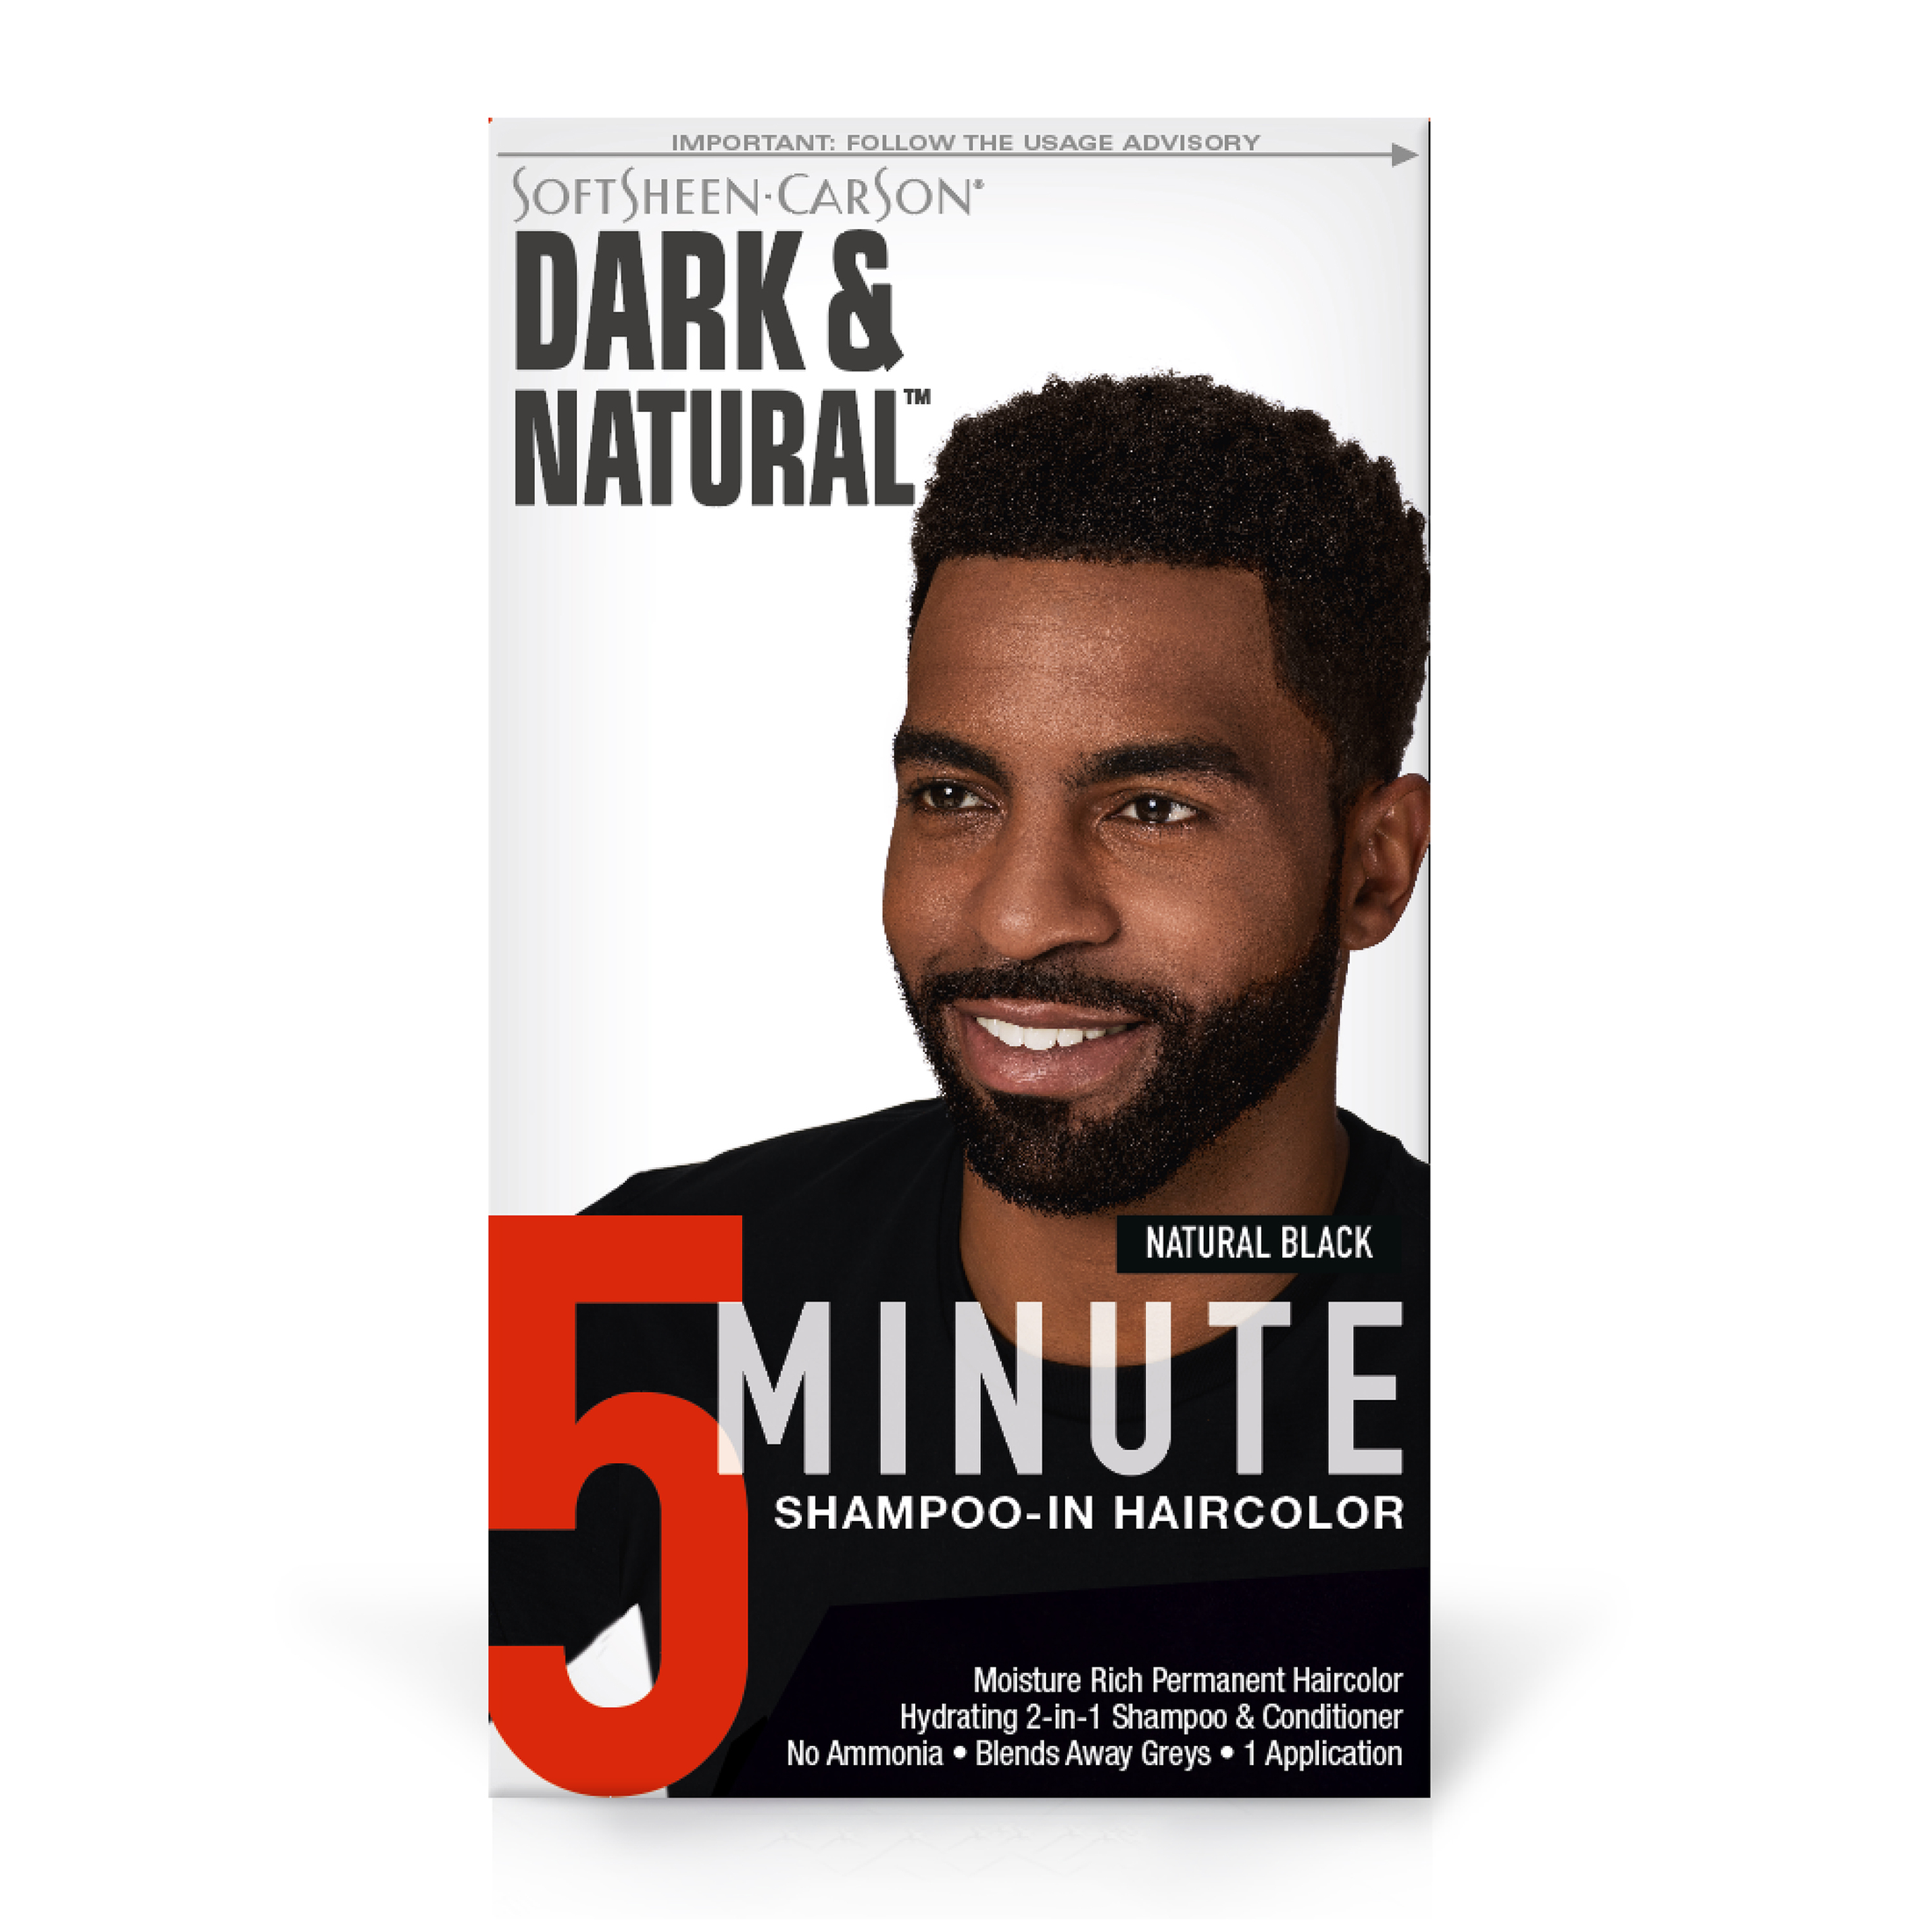 Softsheen-Carson Dark & Natural Shampoo-In Permanent Men's Hair Color, Natural Black - image 1 of 8